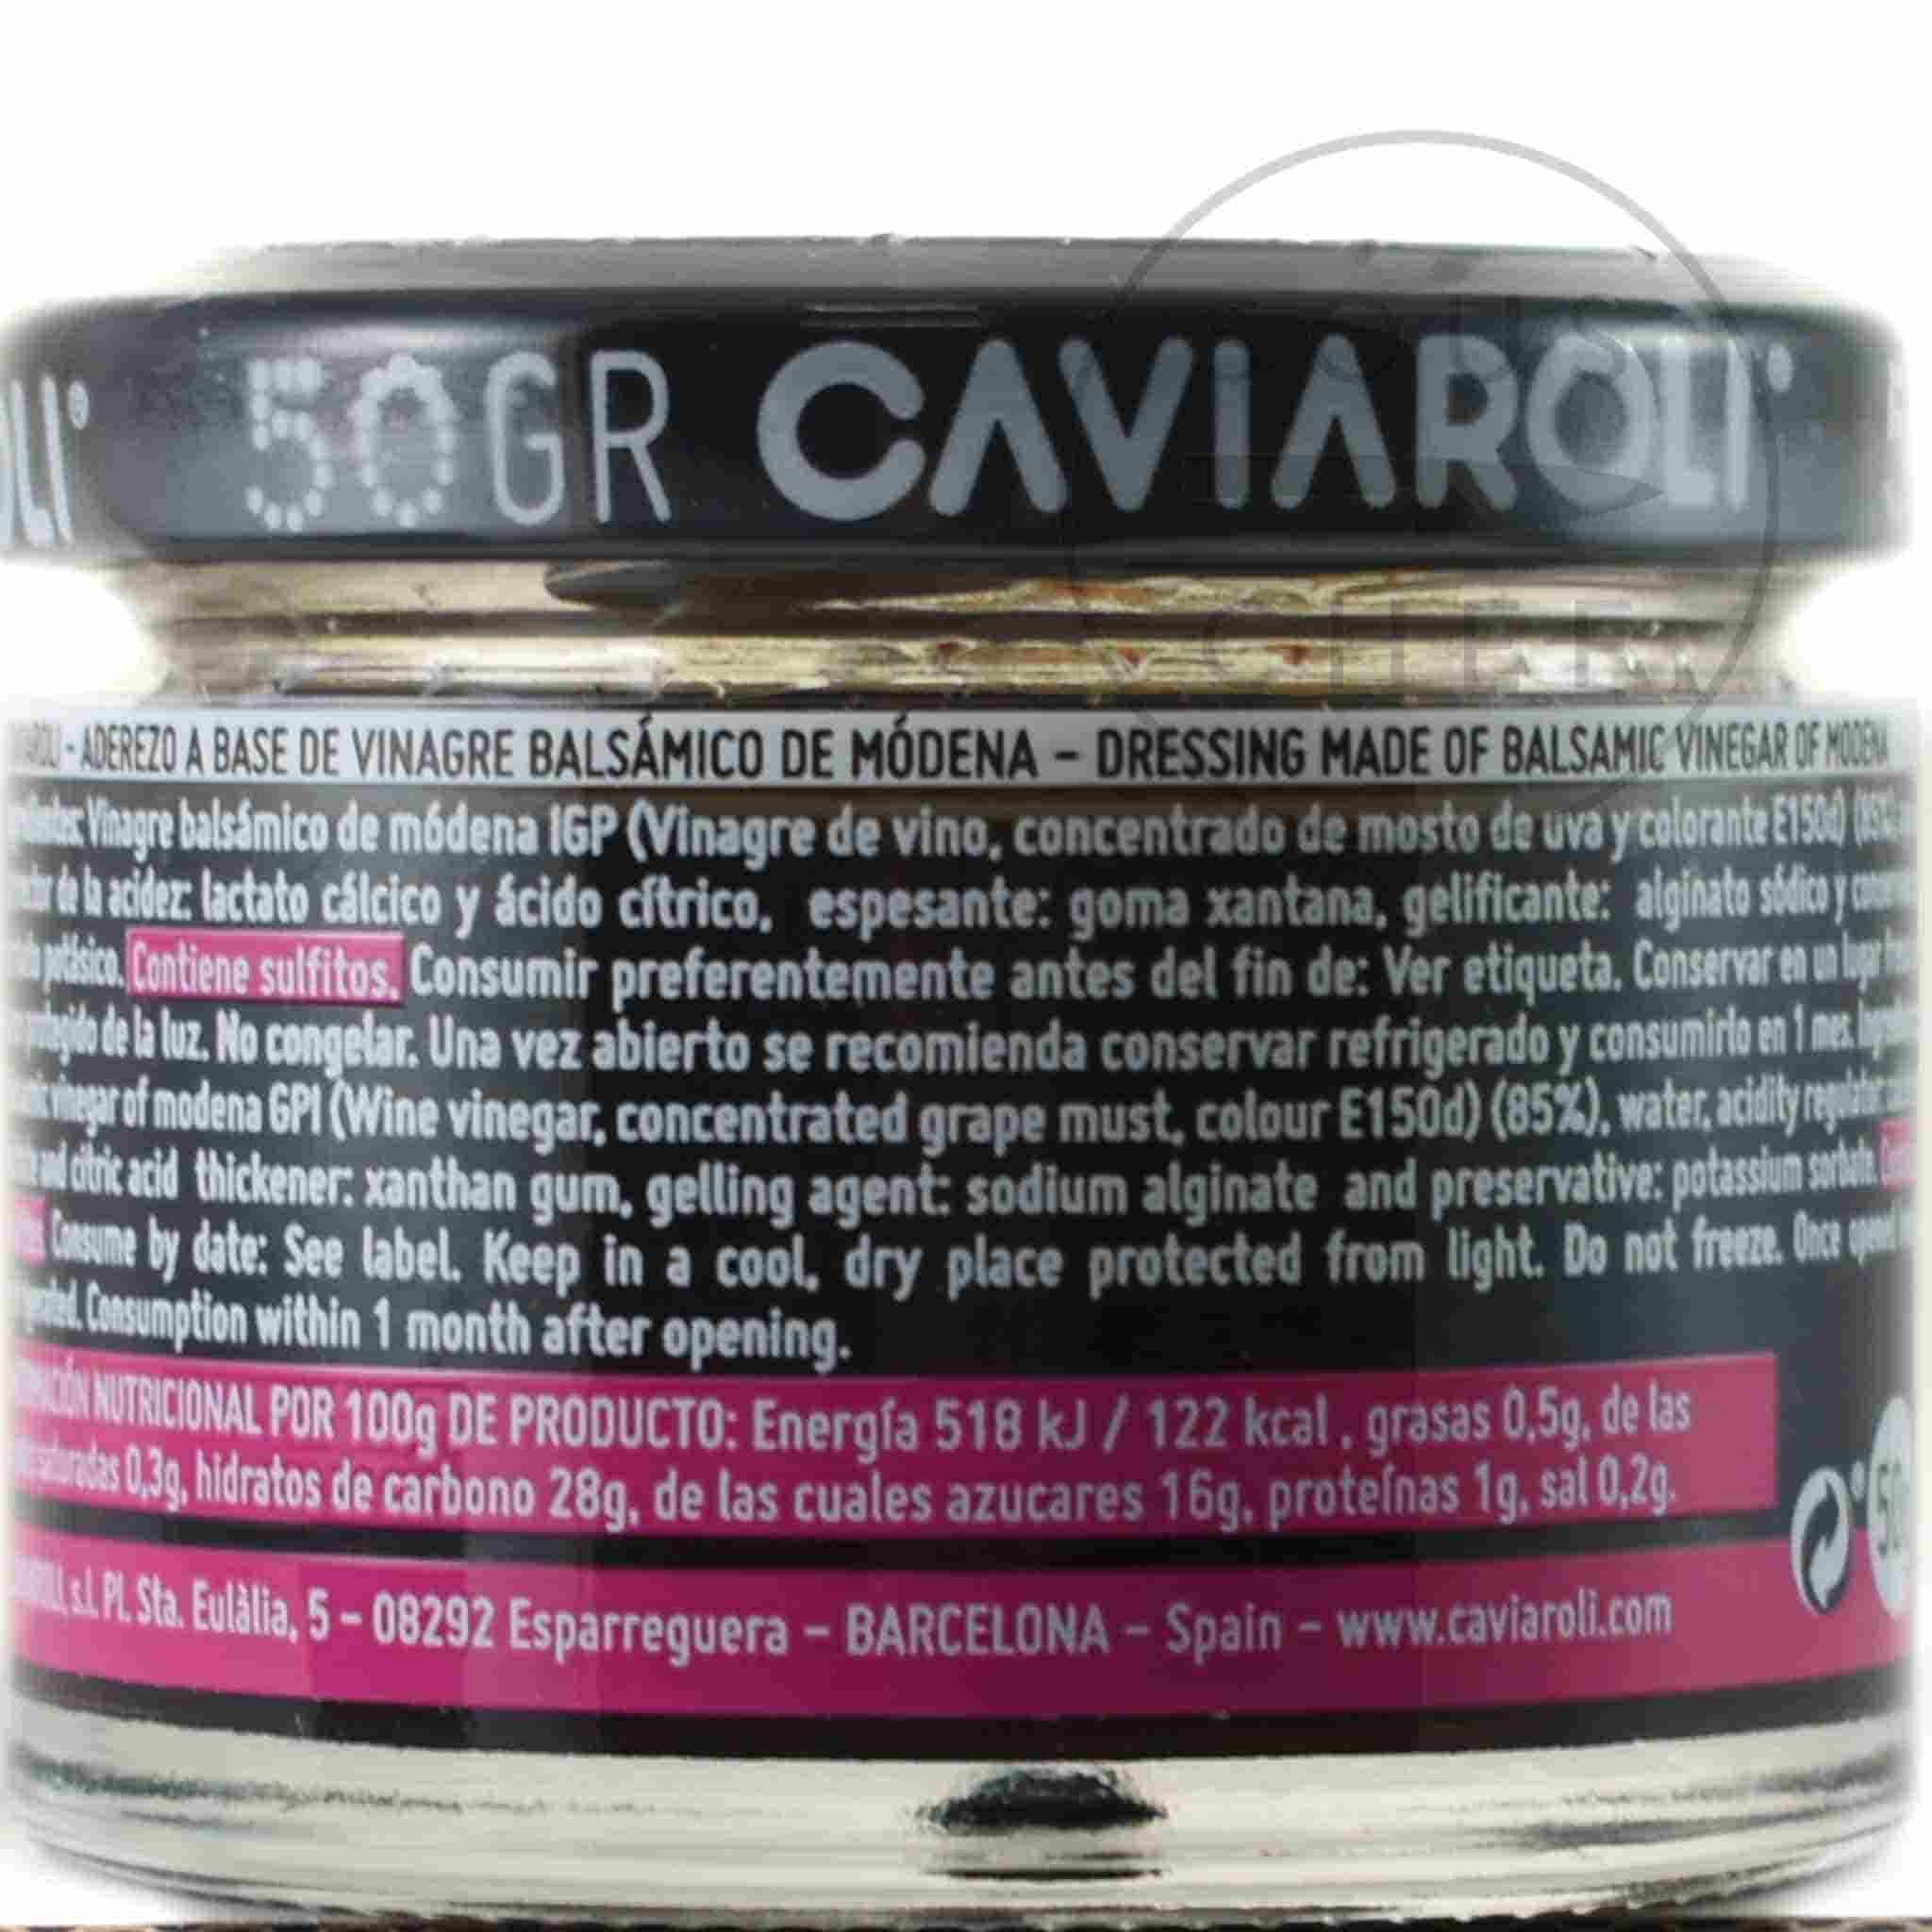 Caviaroli Balsamic Vinegar Pearls, IGP Modena, 50g